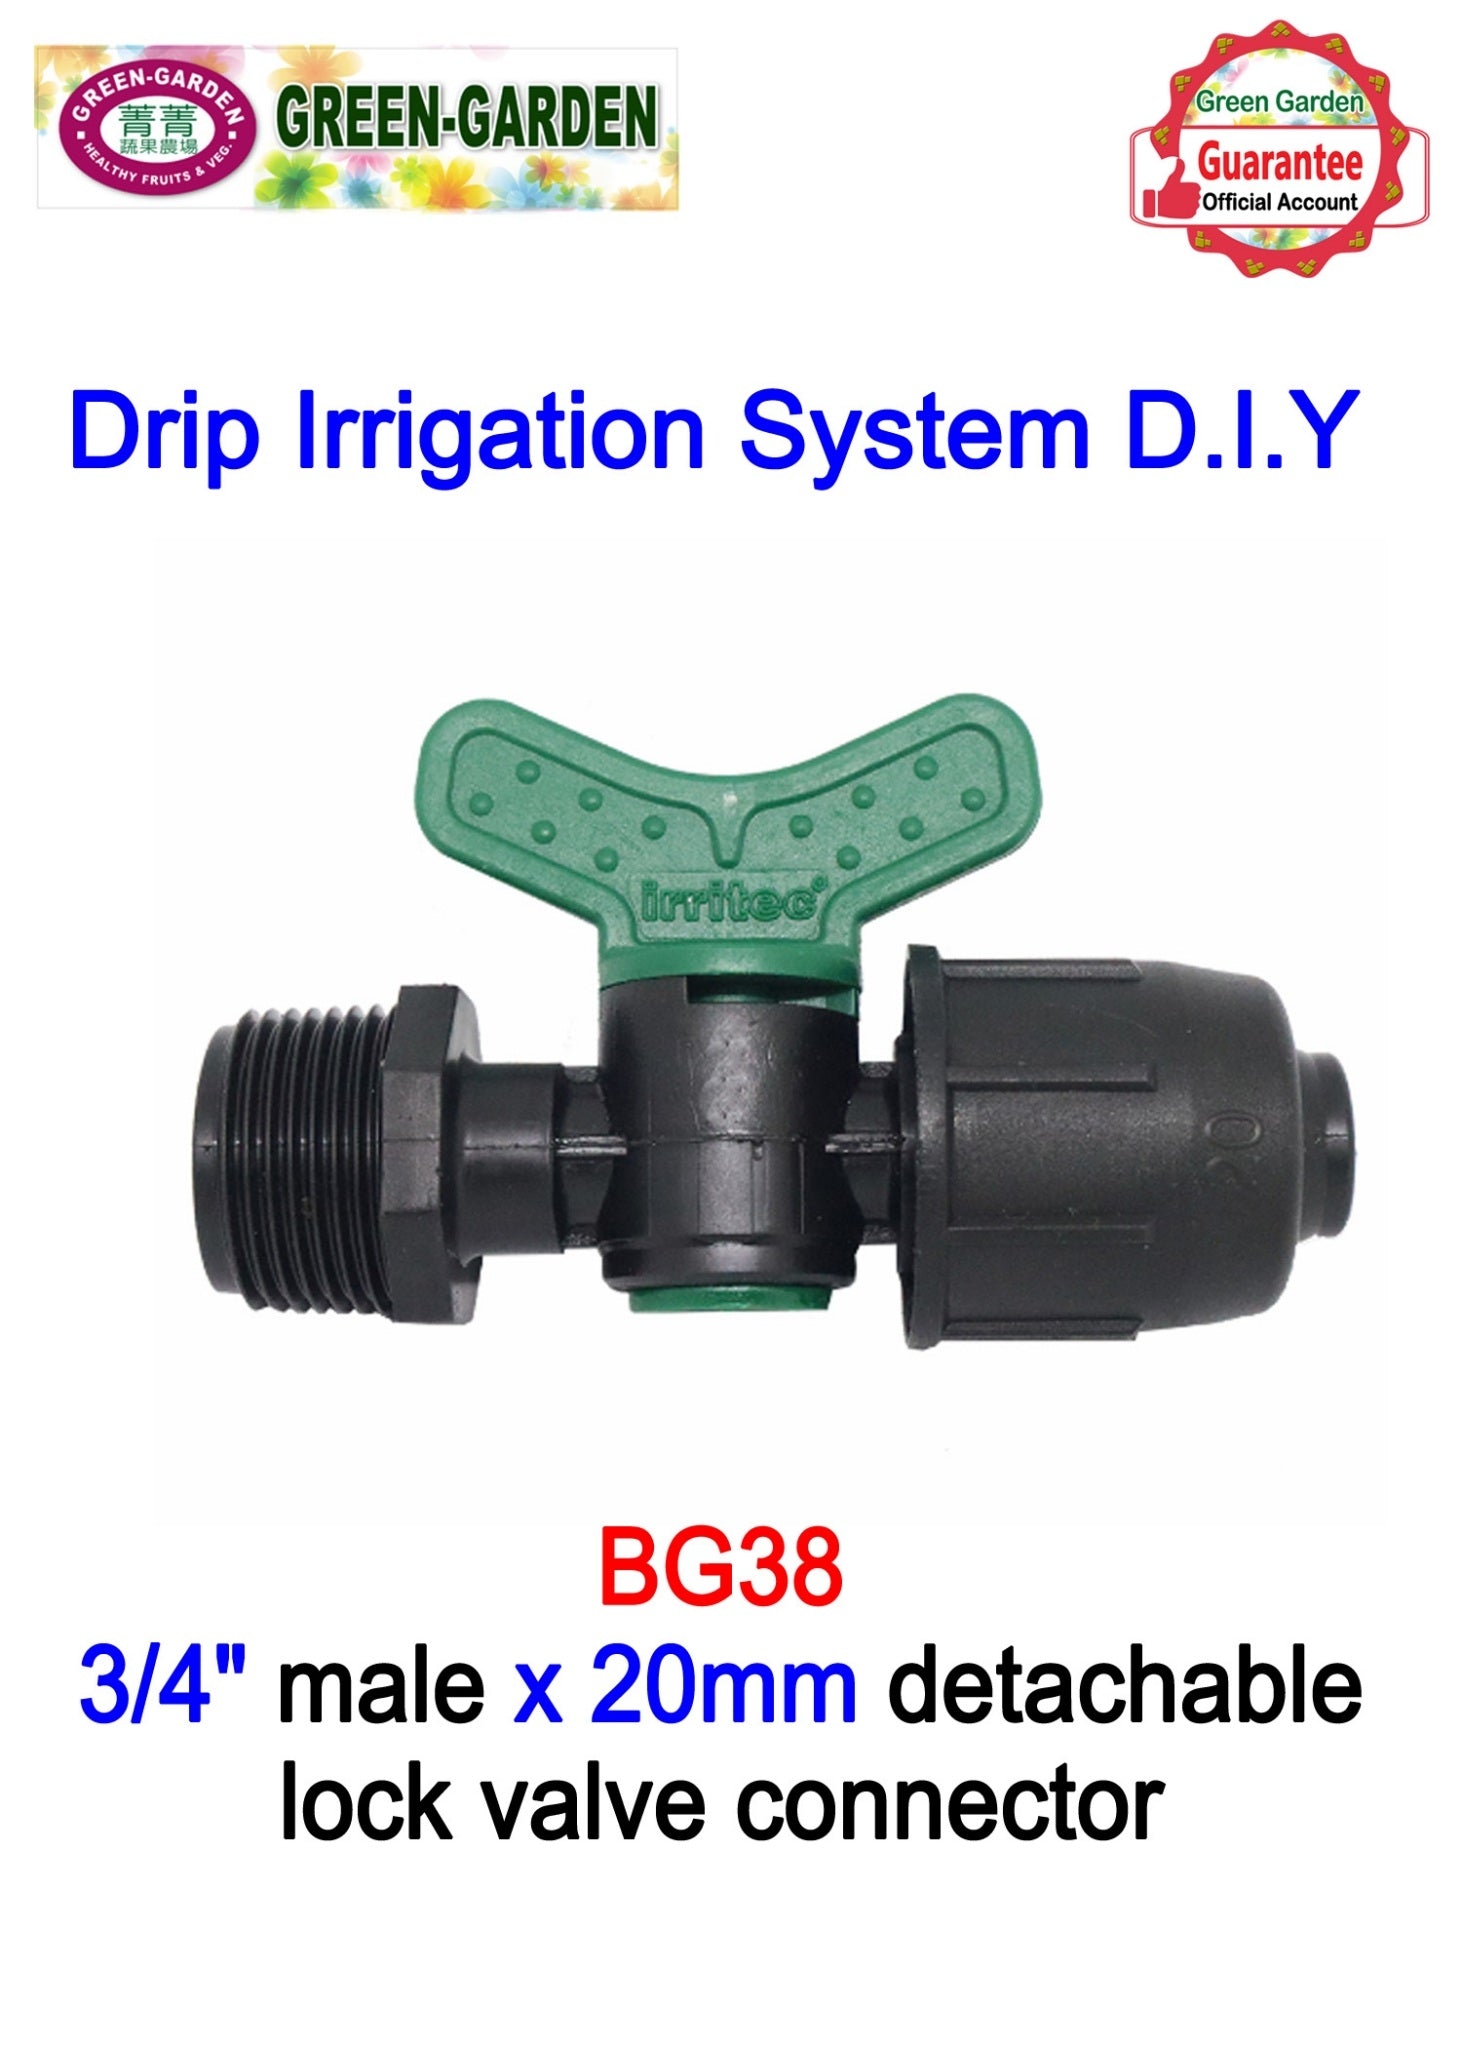 Drip Irrigation System - 3/4"male x 20mm detachable lock valve connector BG38